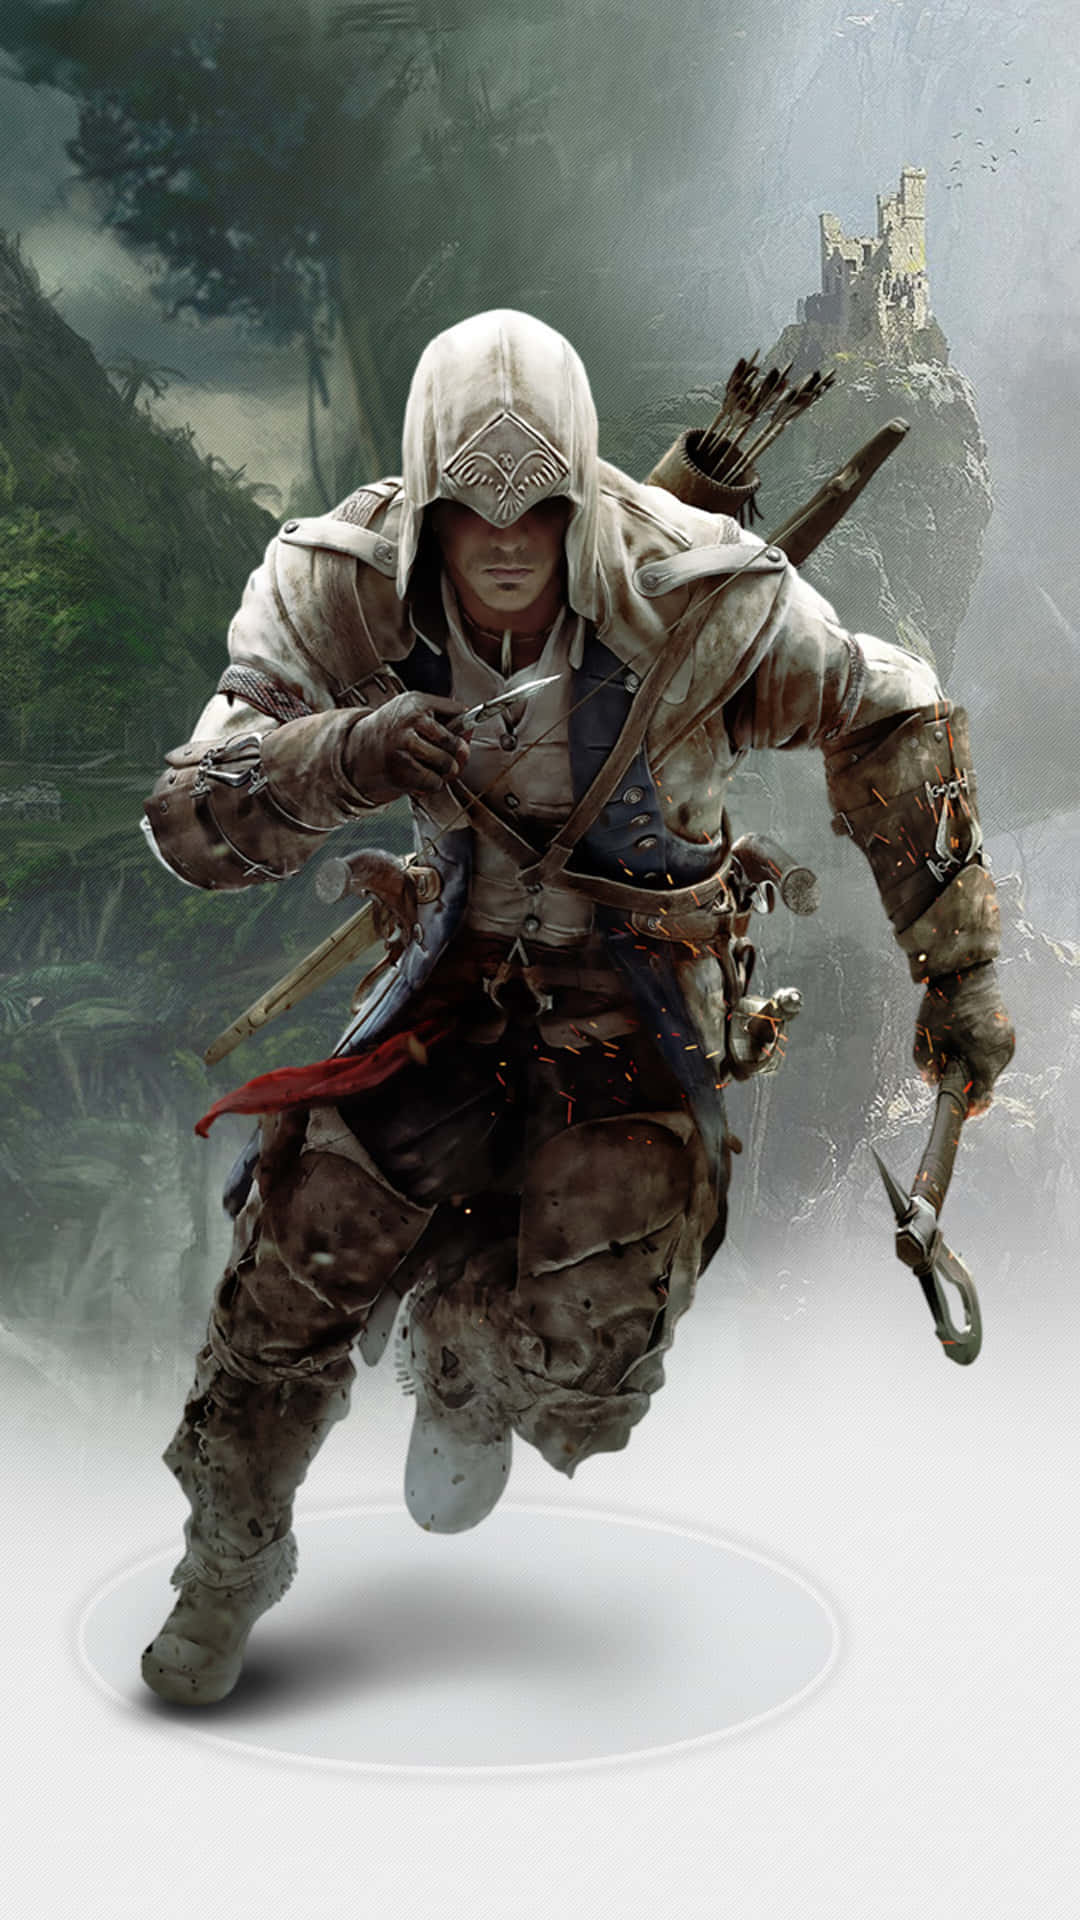 Assassin's Creed Iii - Wallpaper